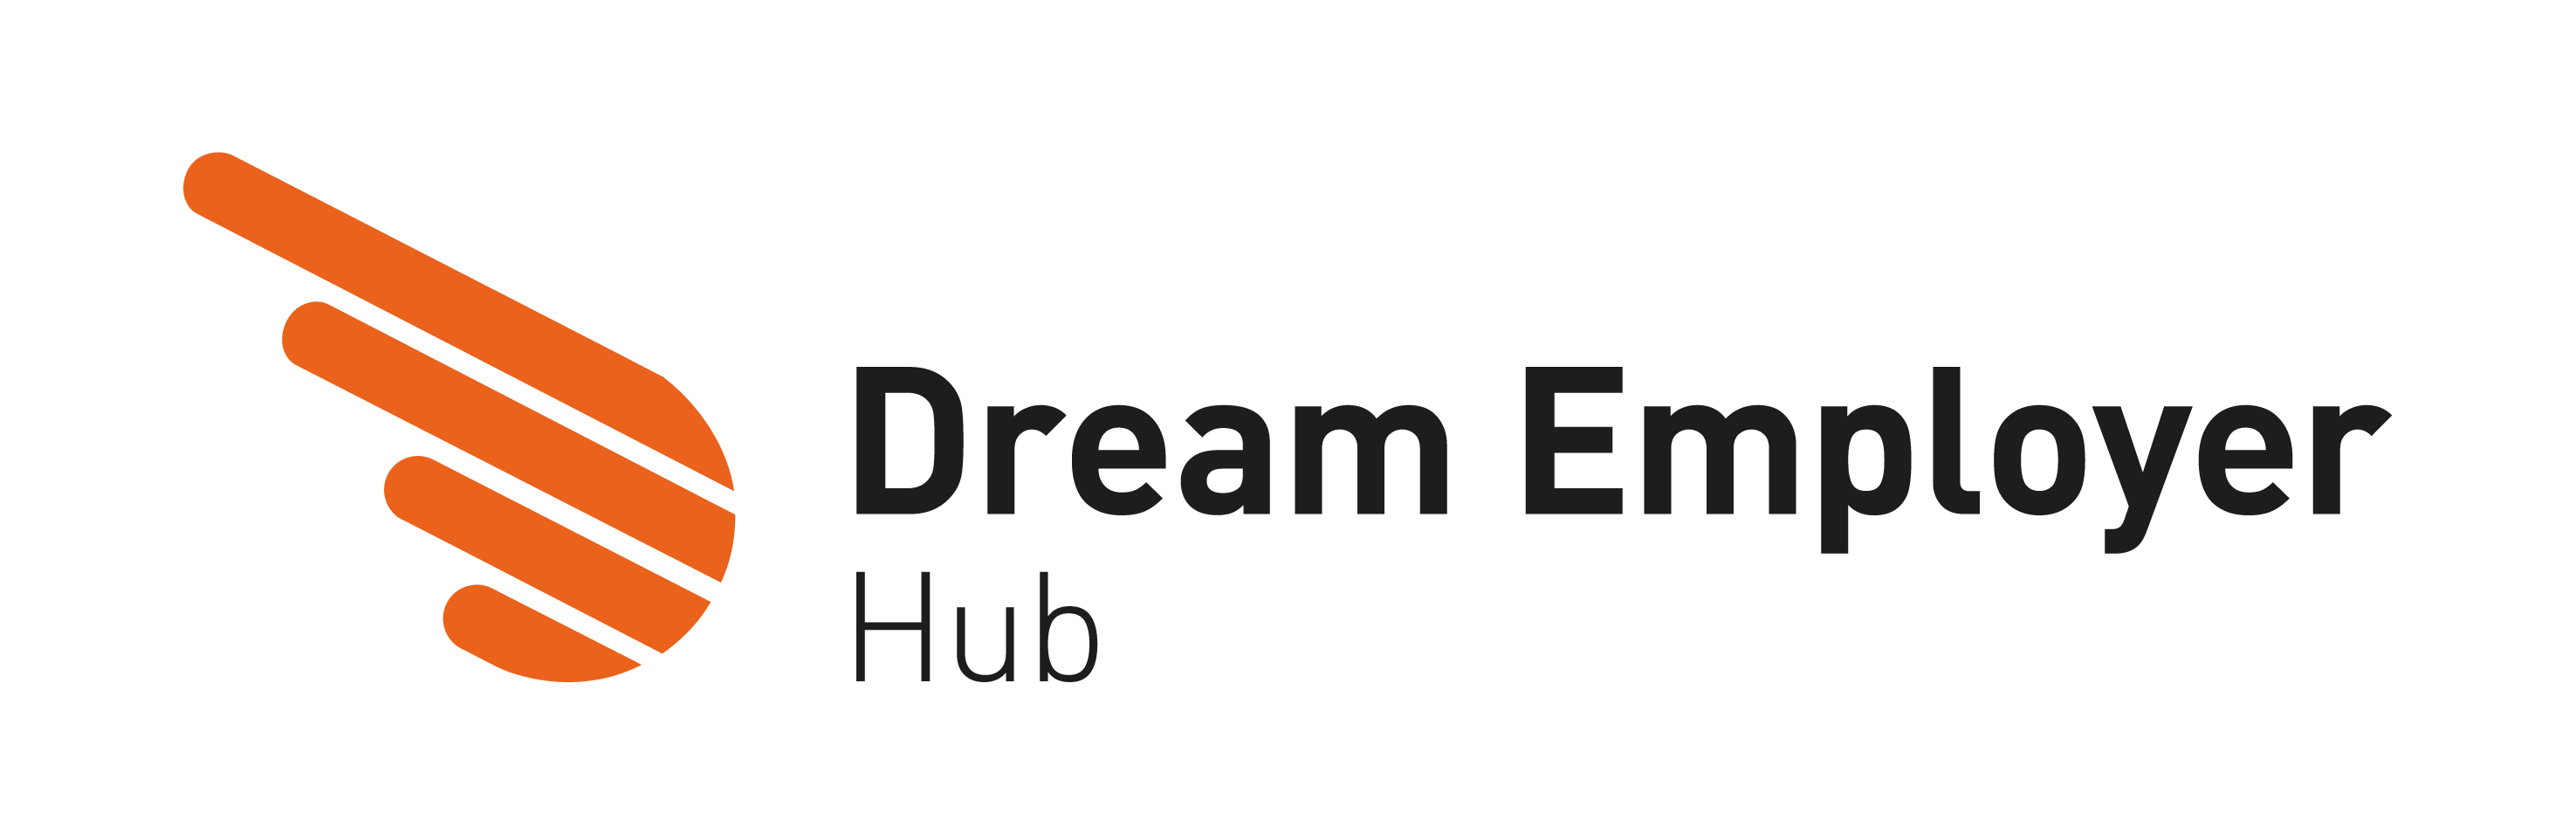 Dream Employer HUB